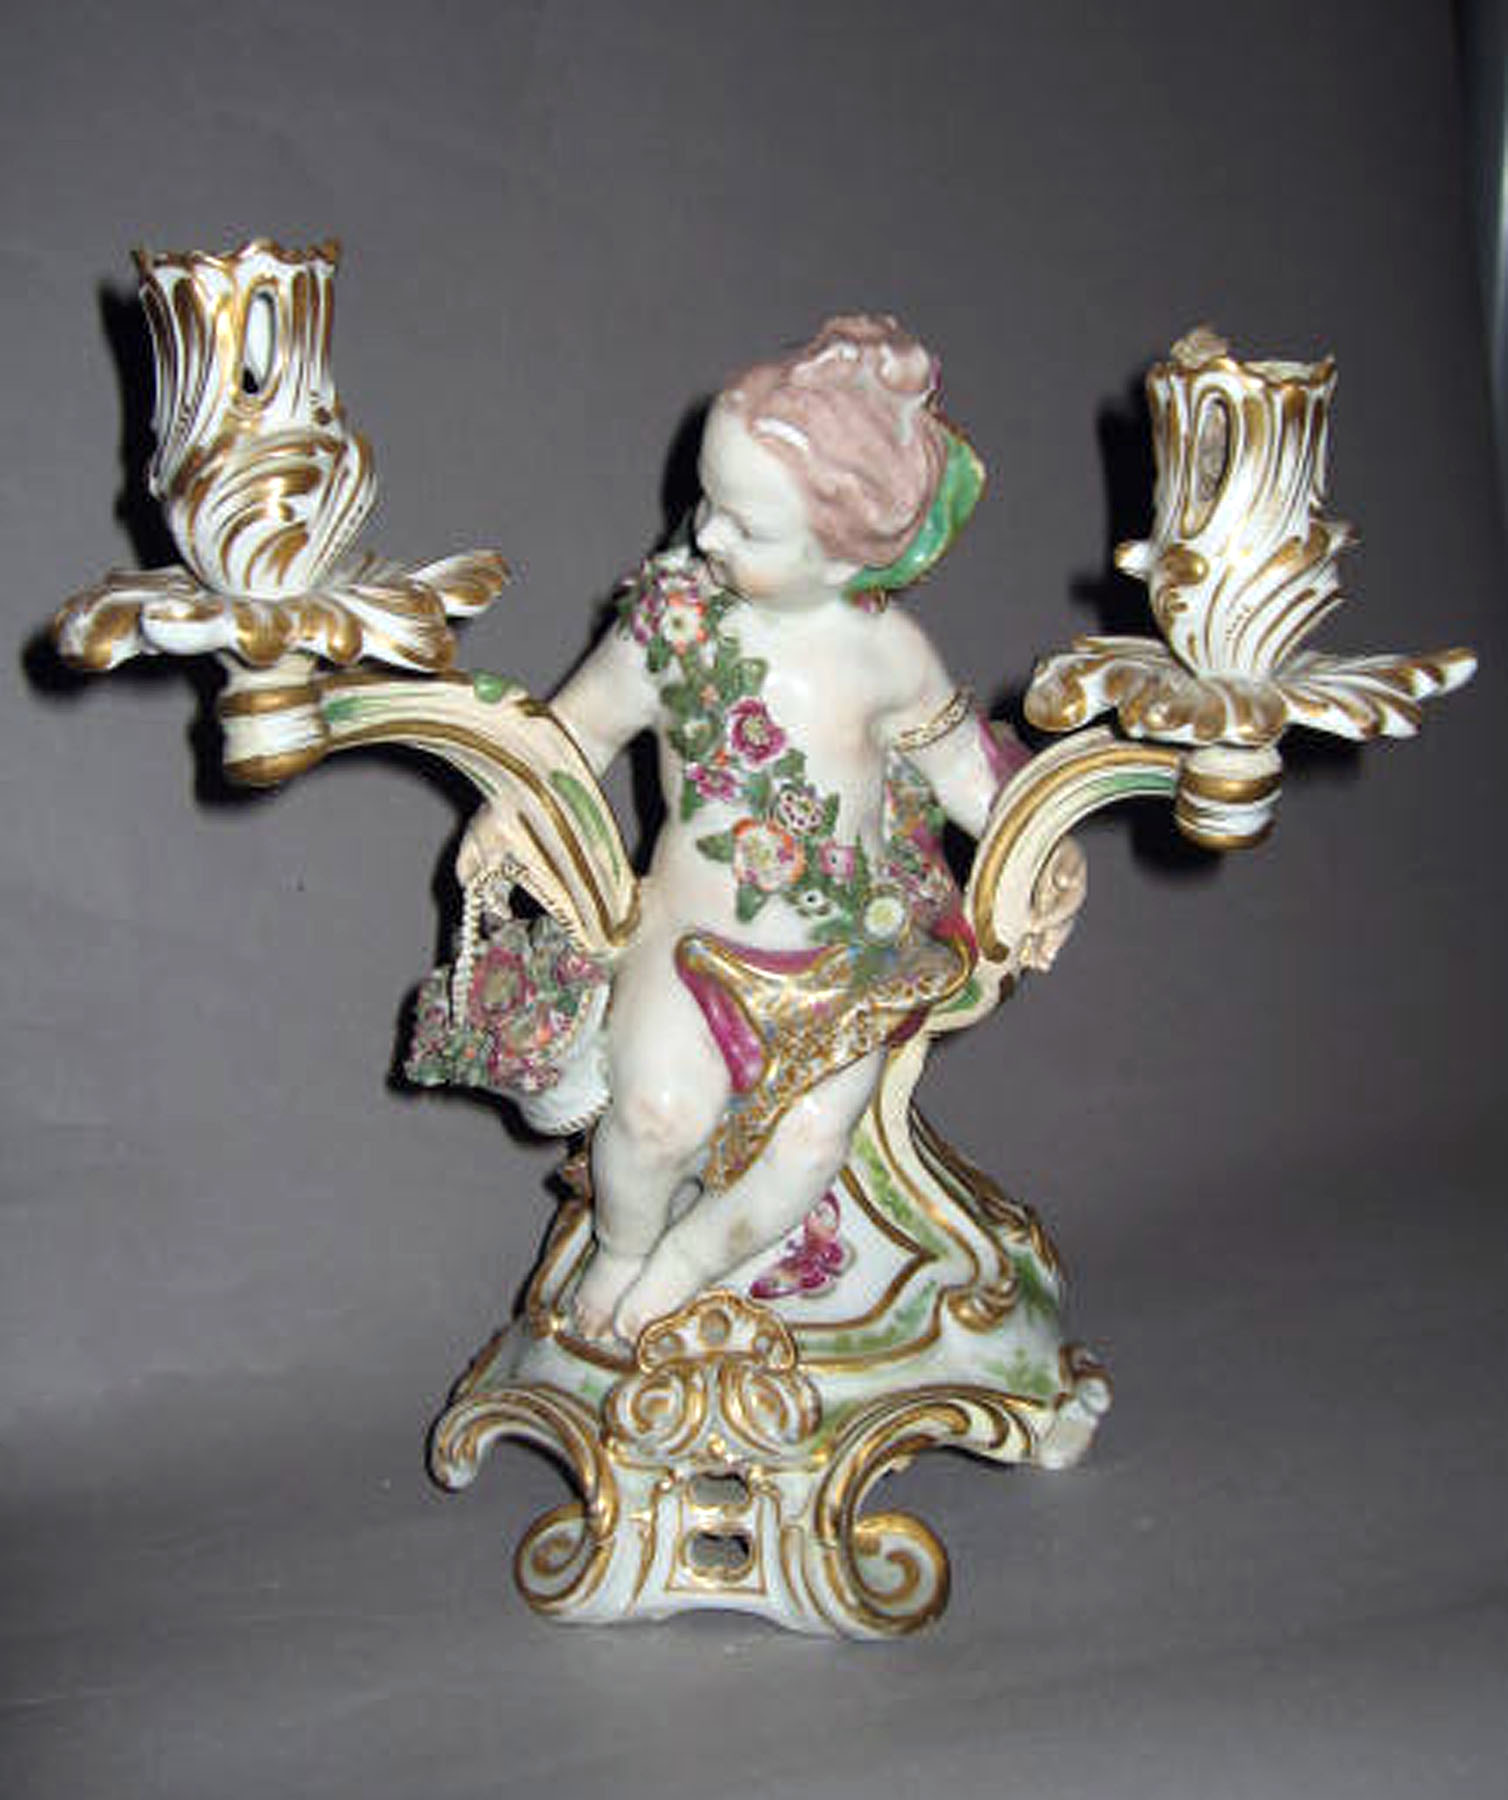 1963.0915 Porcelain candlestick figure